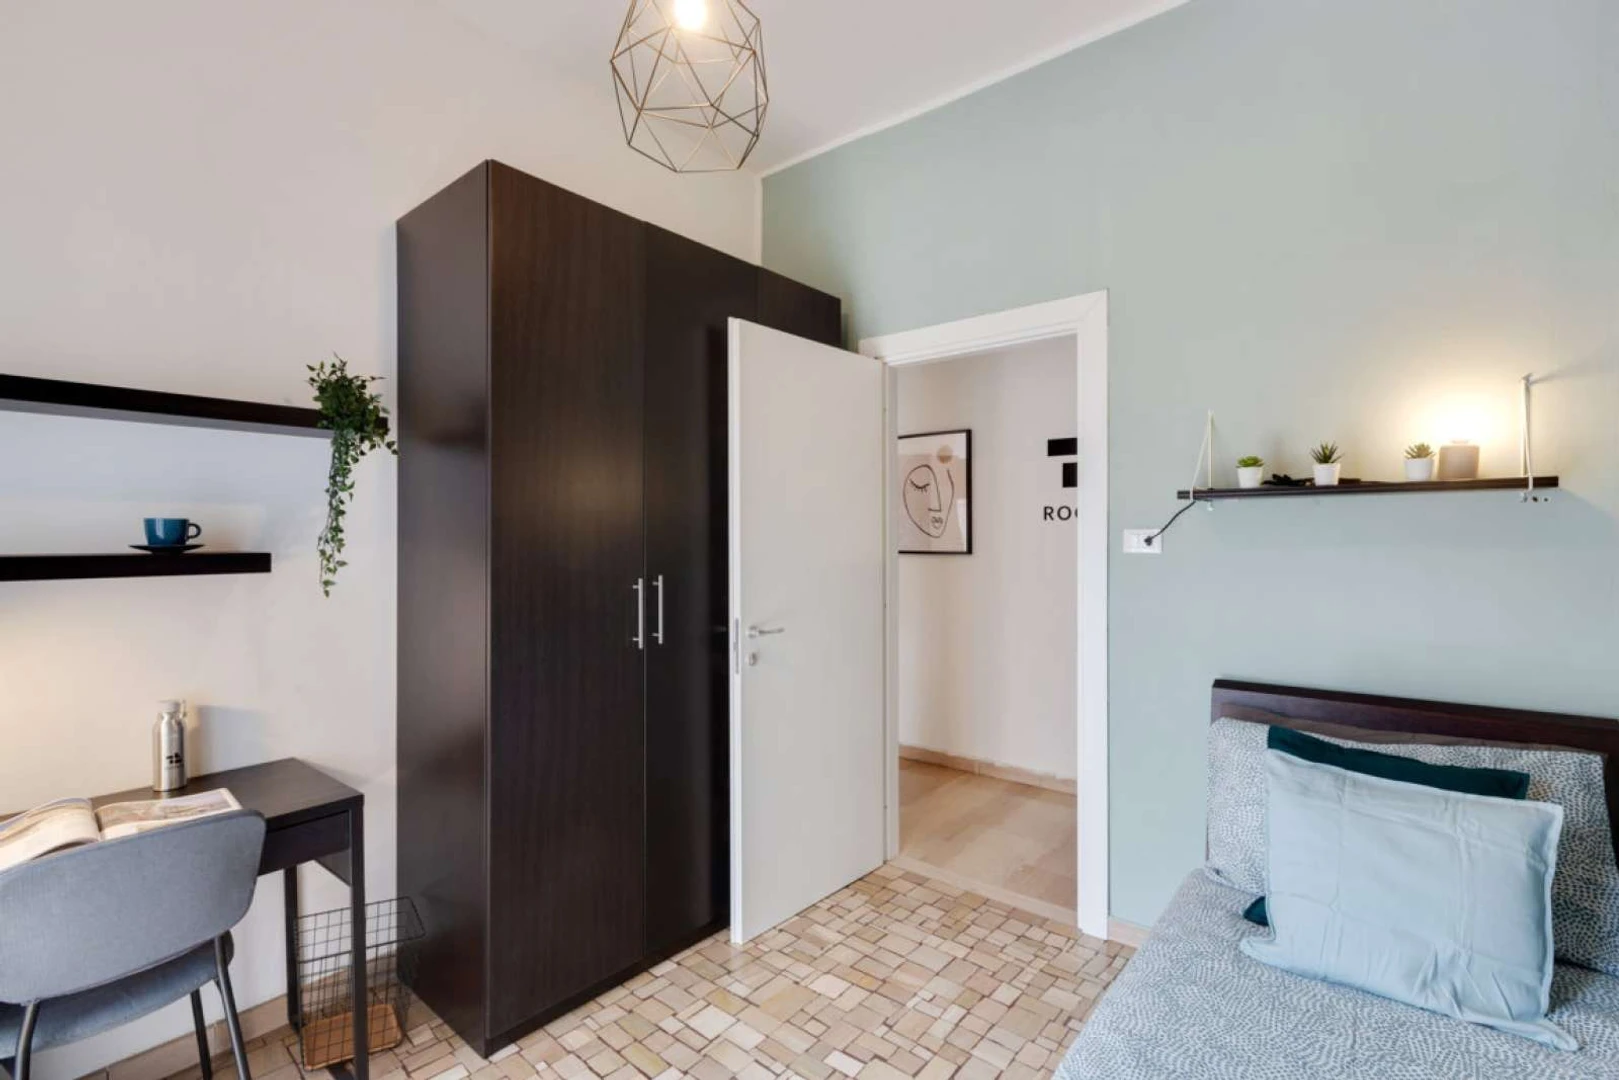 Cheap private room in milano